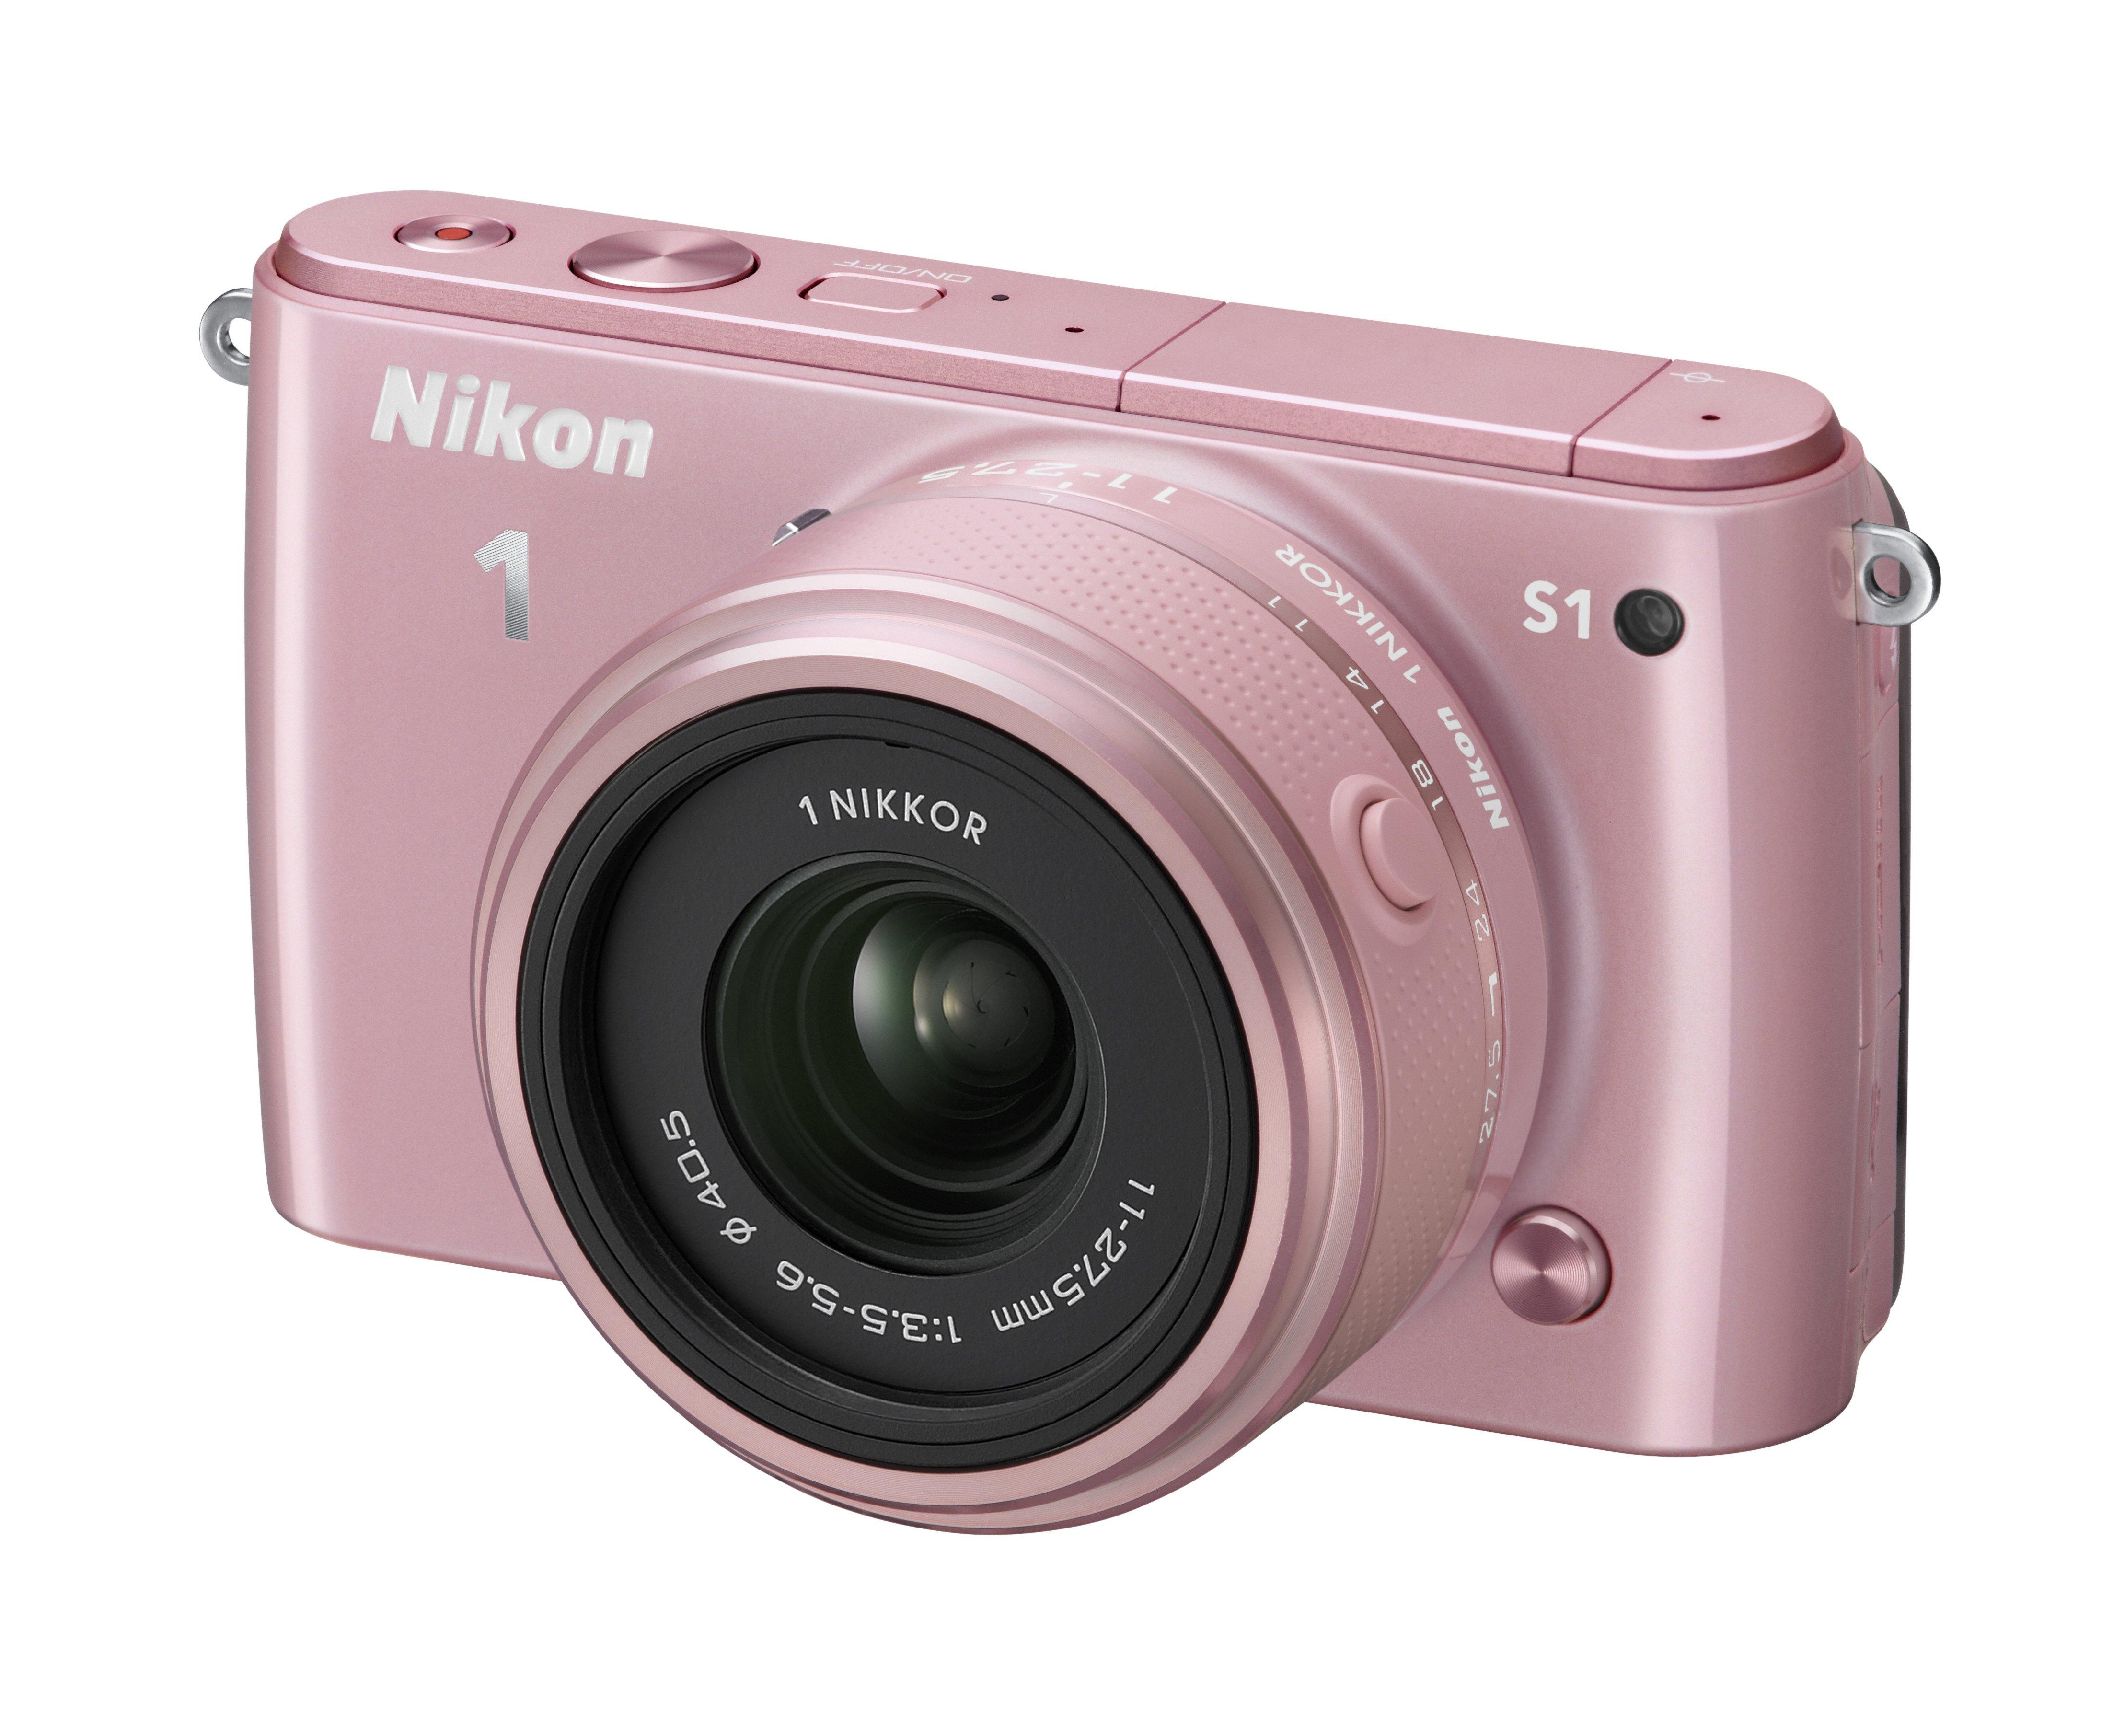 Nikon S1 ces2013